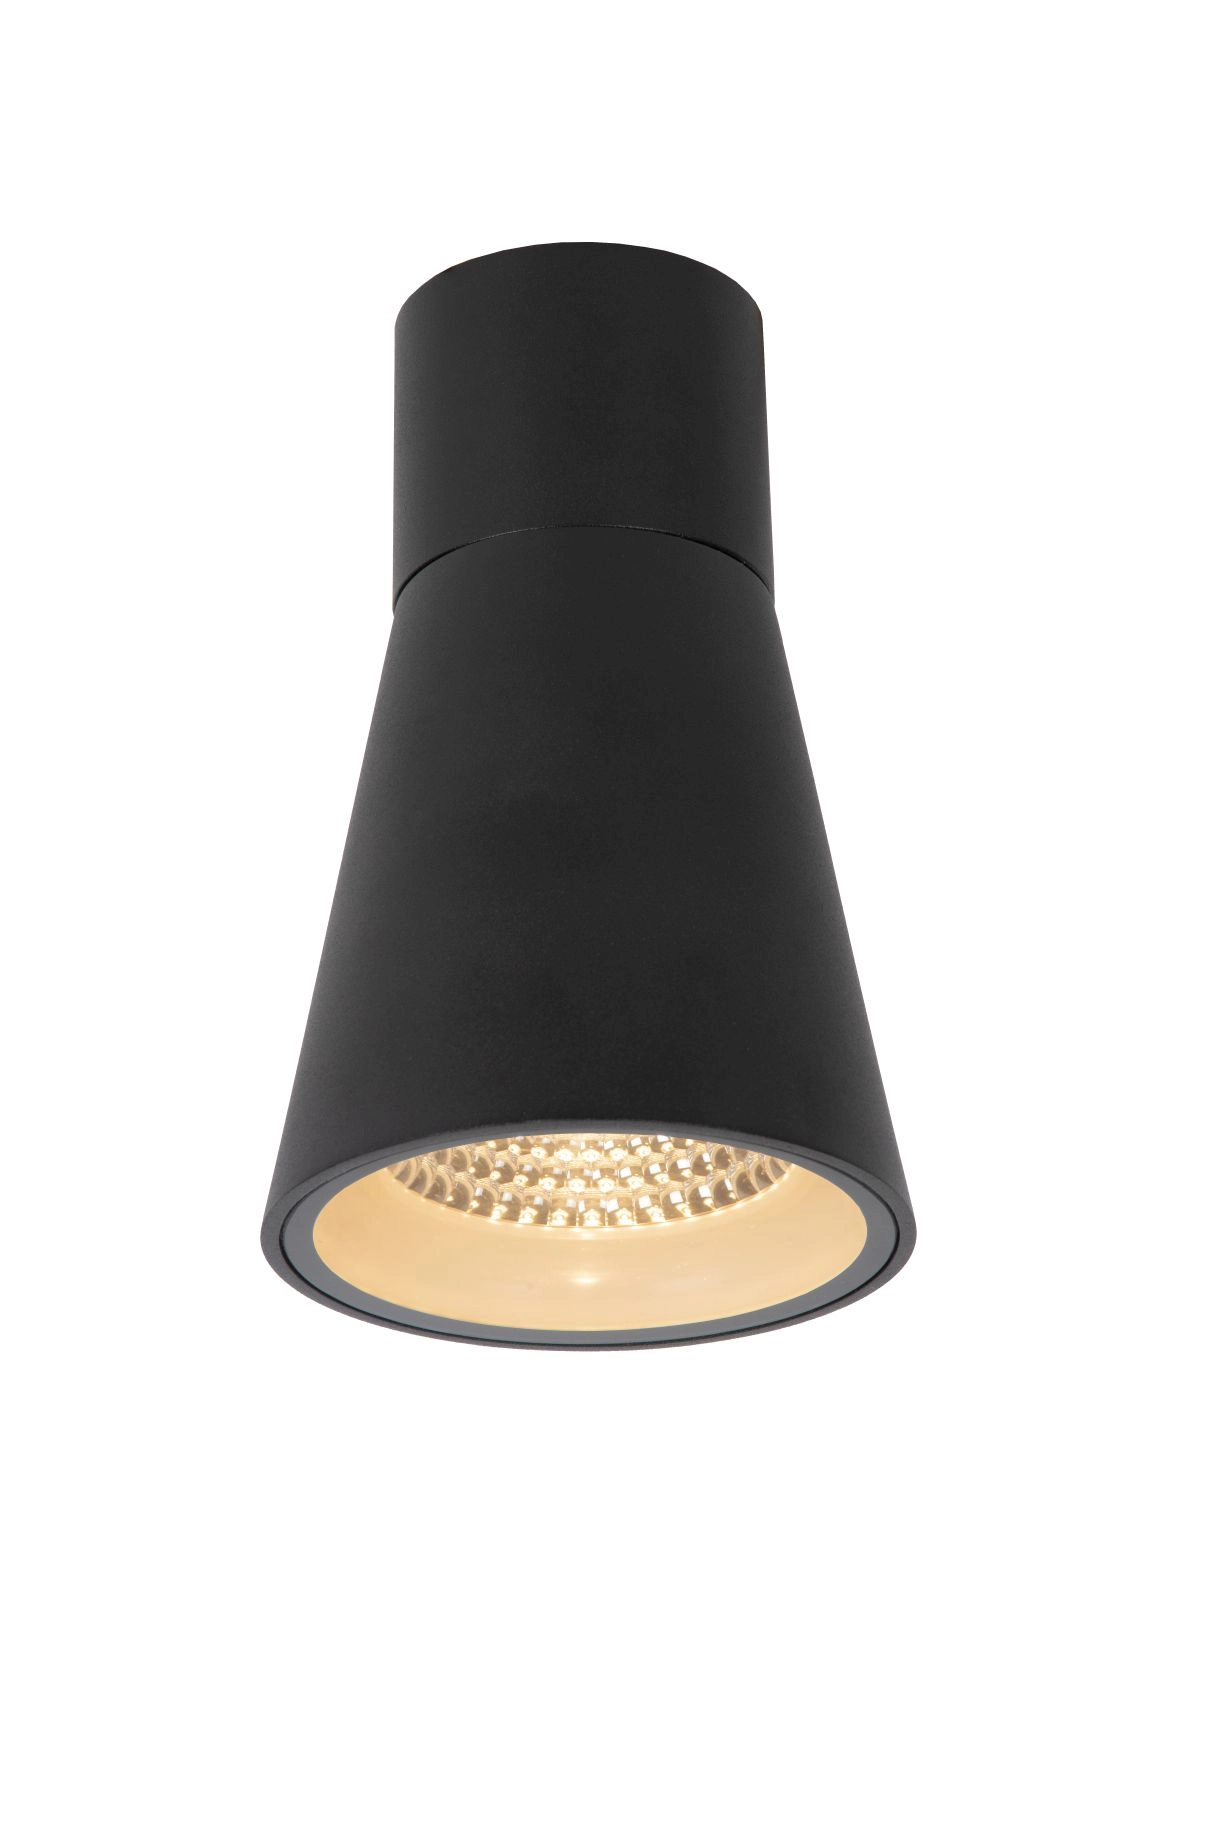 LU 28800/07/30 Lucide DERBY - Flush ceiling light Outdoor - LED - 1x9W 2700K - IP65 - Black